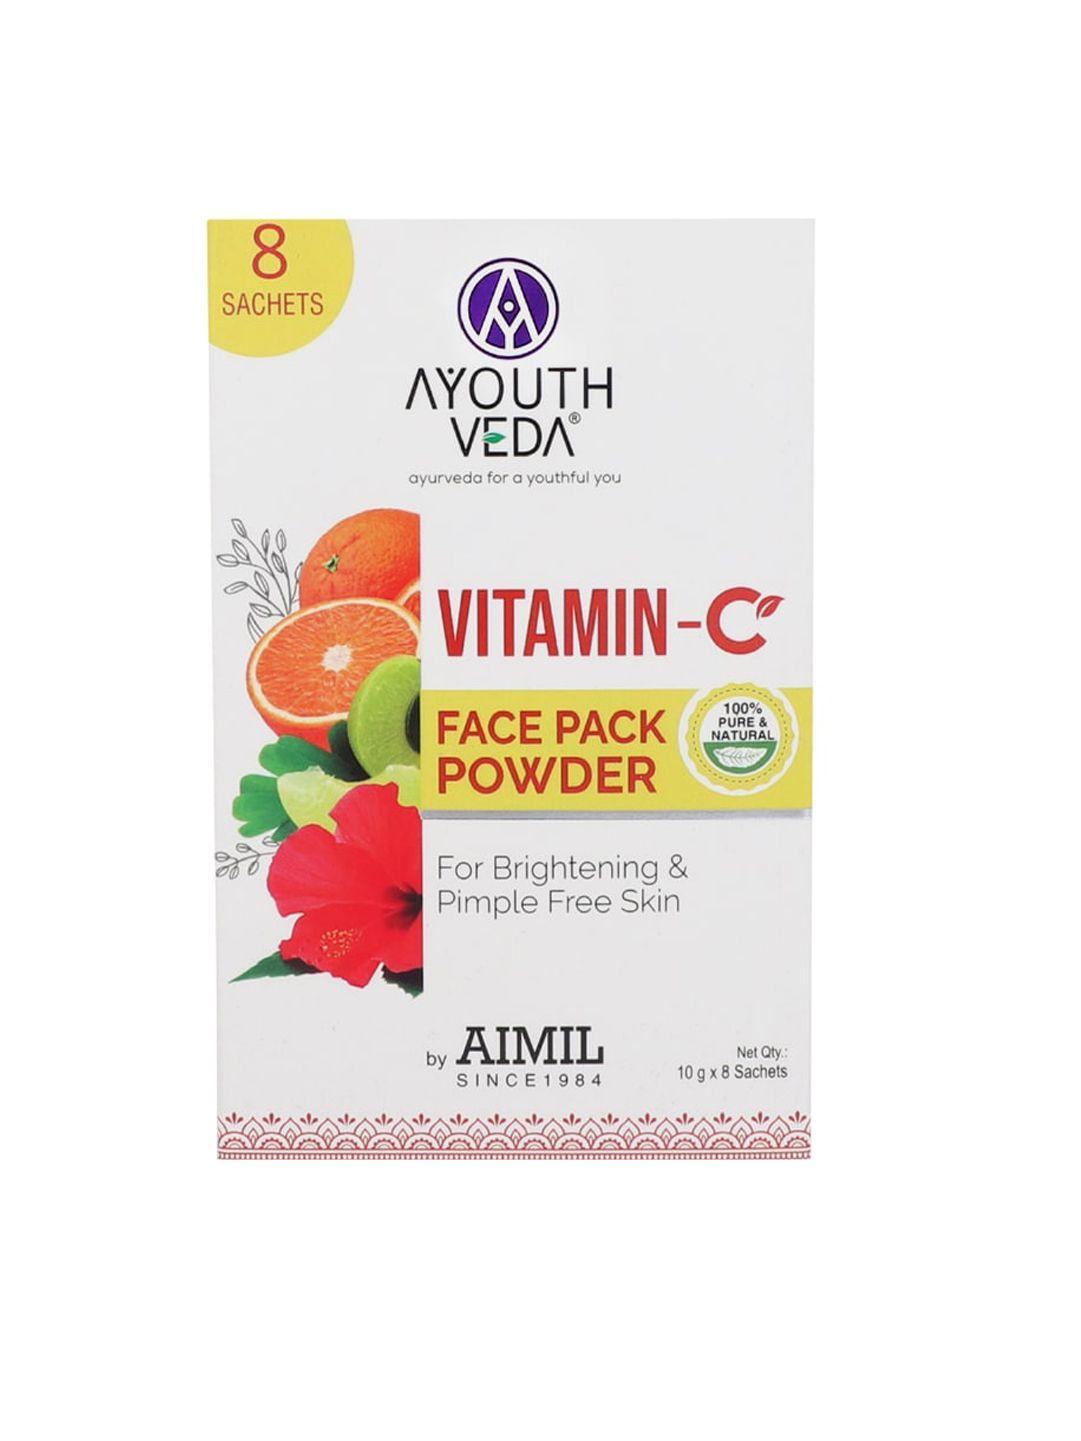 ayouthveda vitamin c face pack powder to reduces pigmentation - 10g x 8 sachets